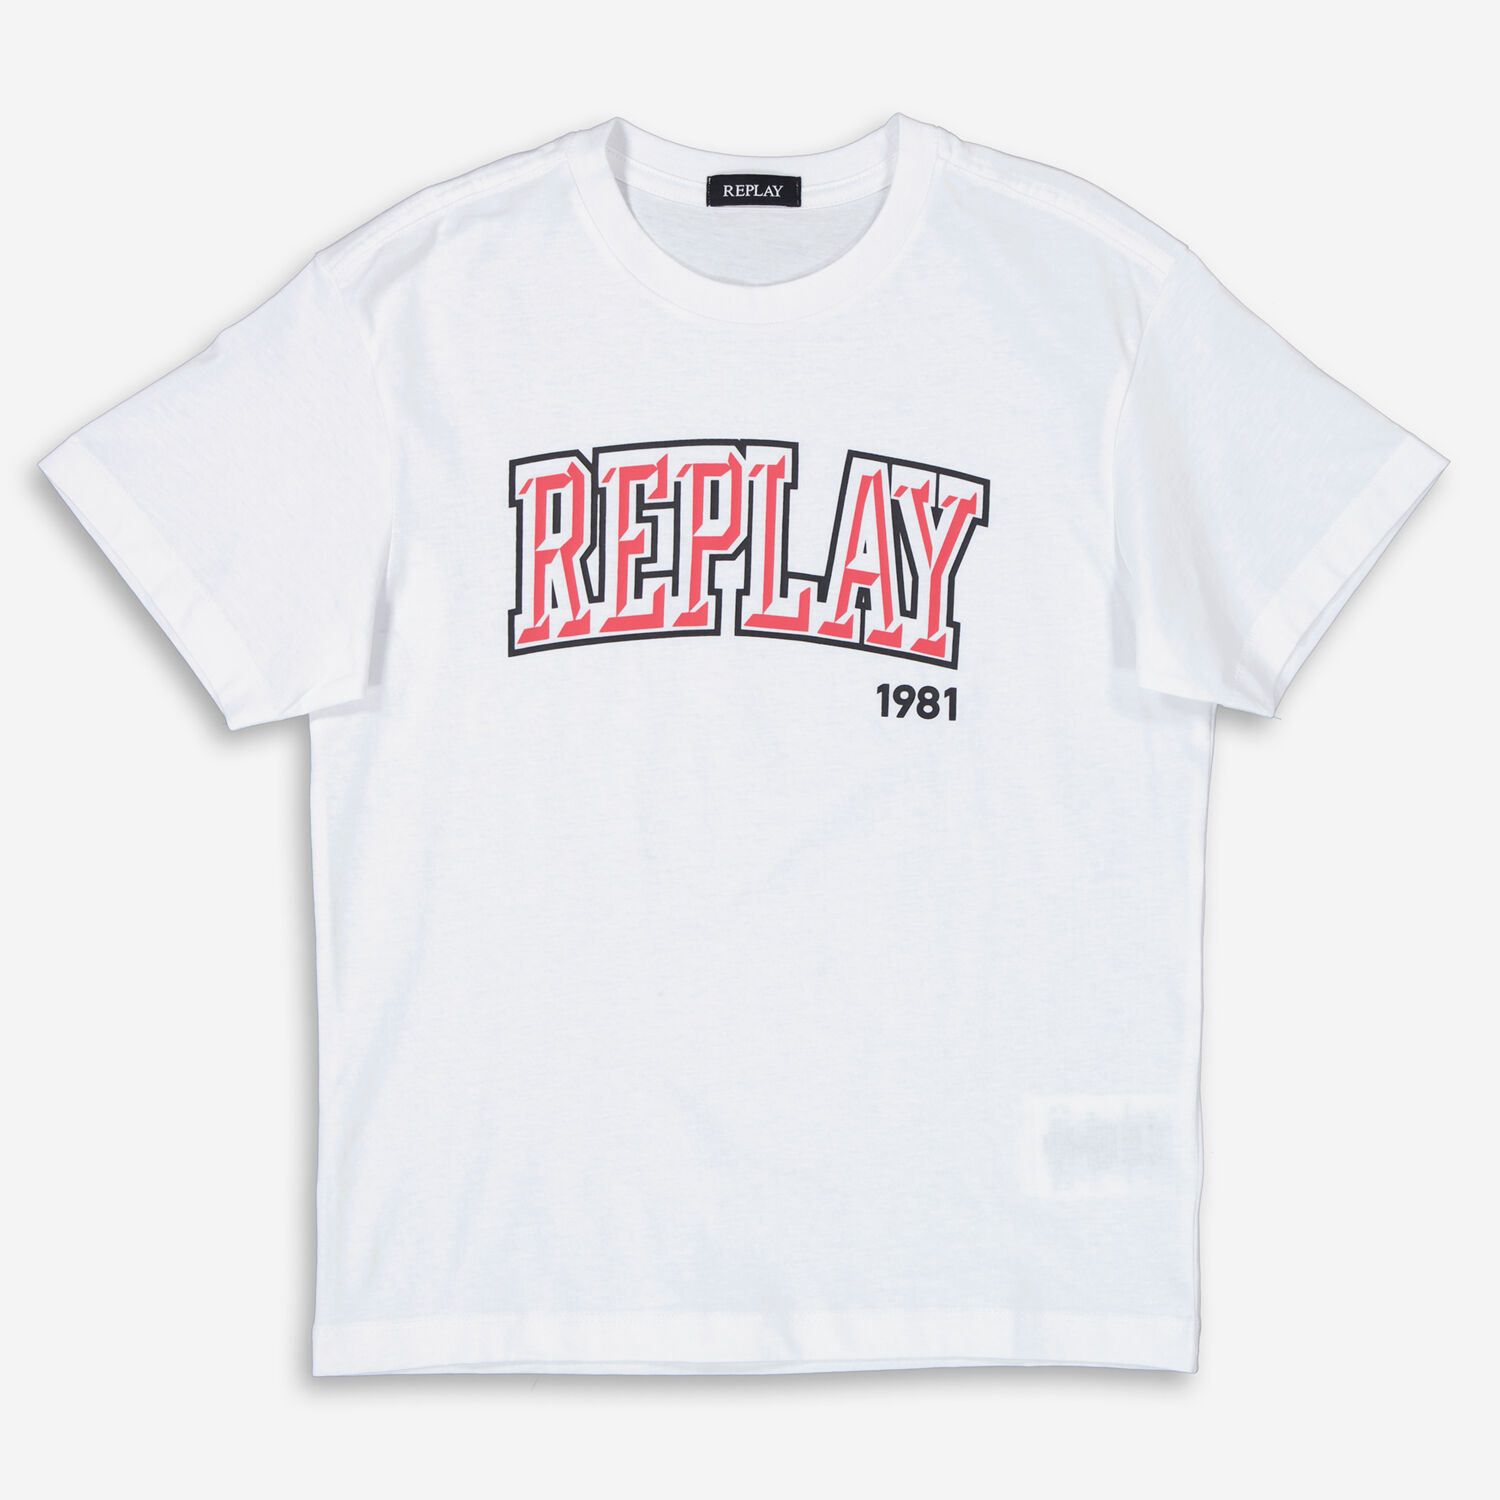 цена Белая футболка с логотипом Replay